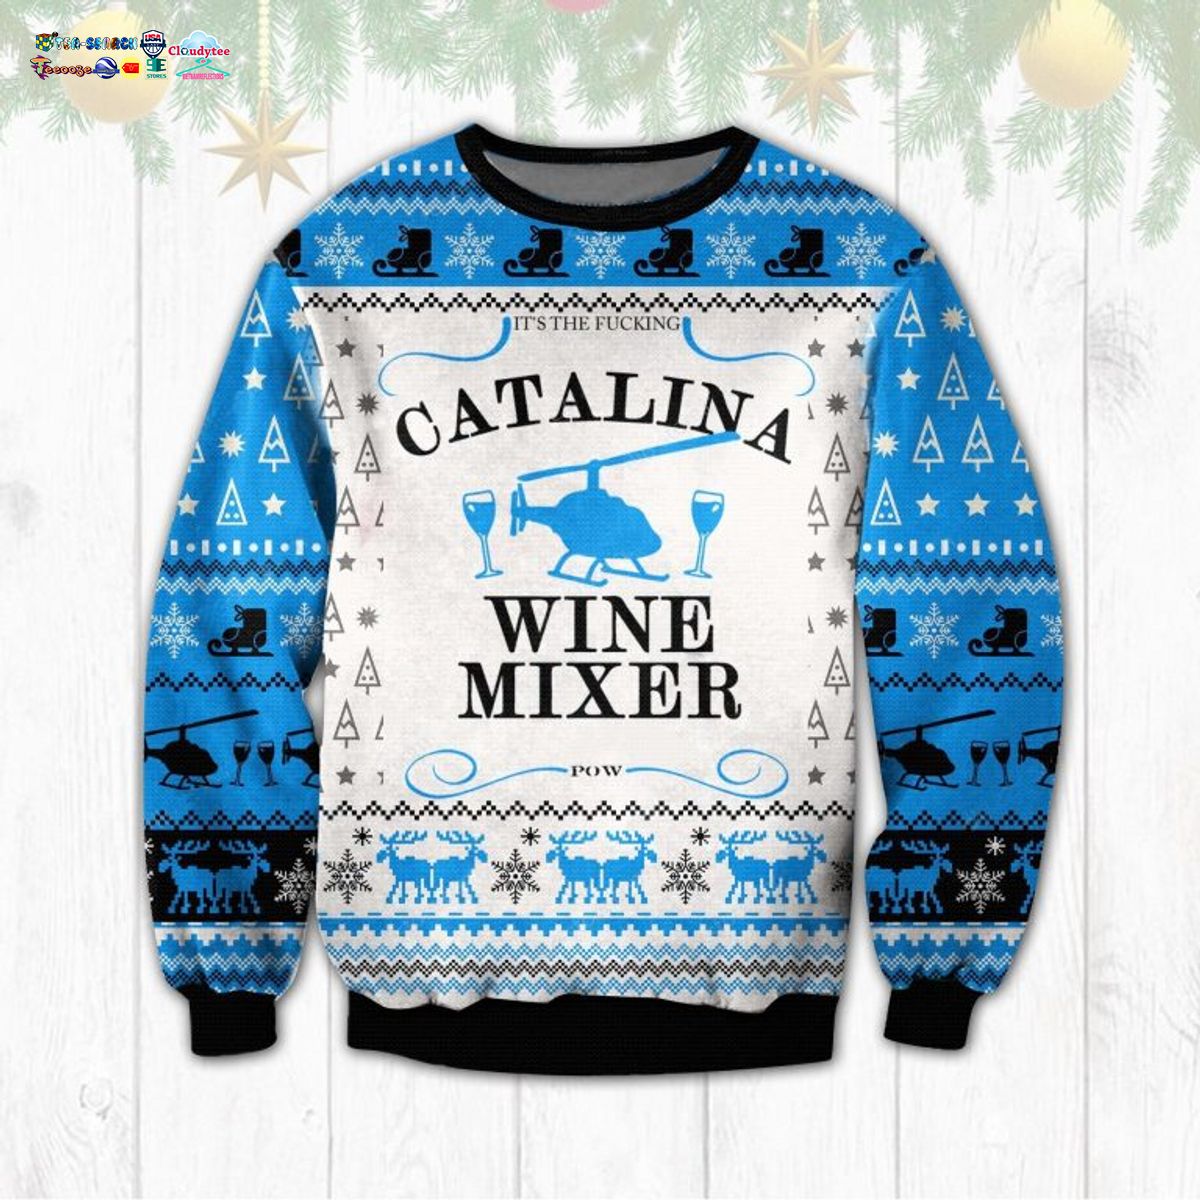 It's The Fucking Catalina Wine Mixer Pow Ugly Christmas Sweater